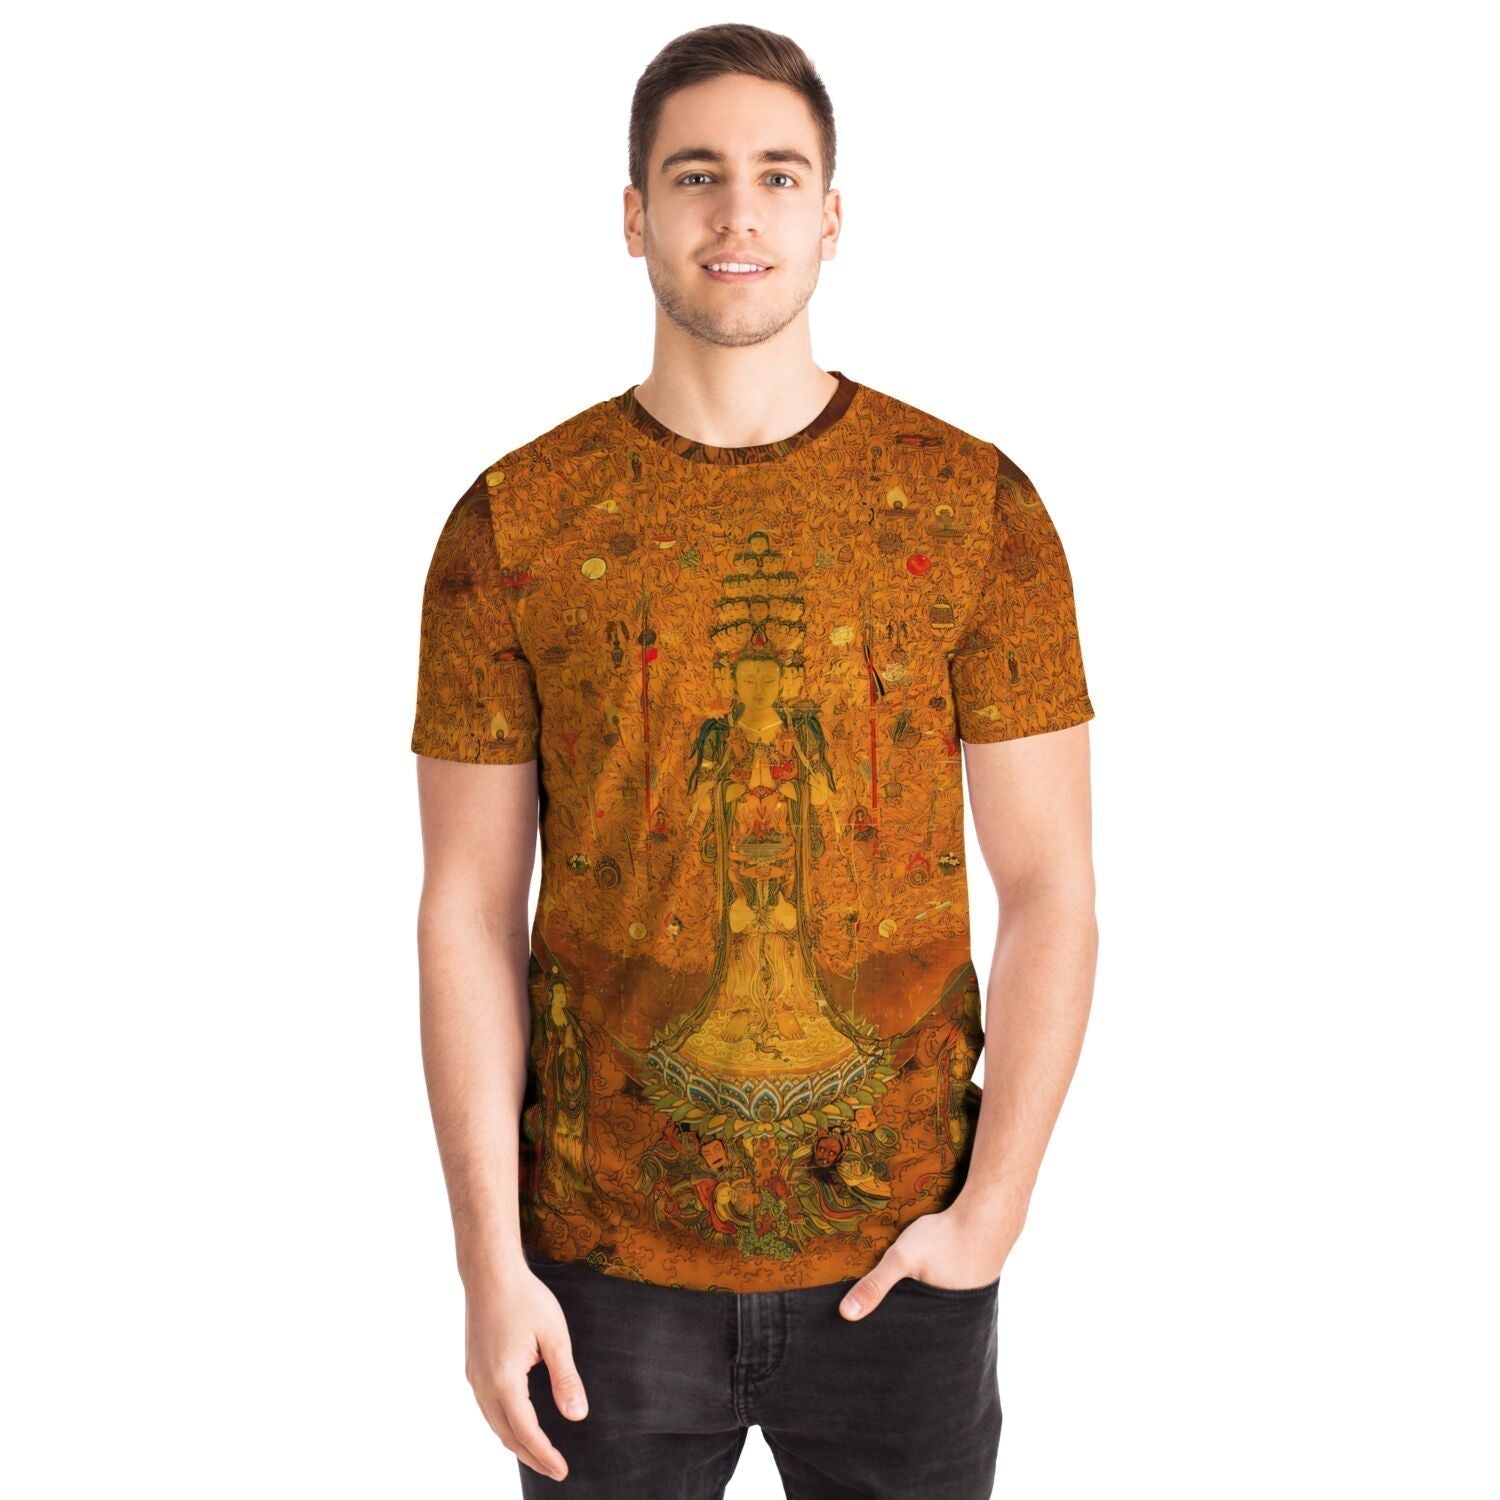 Guan Yin of a Thousand Arms and Eyes | Avalokiteshvara, Kannon | Buddhist Deity Graphic Art T-Shirt - Sacred Surreal